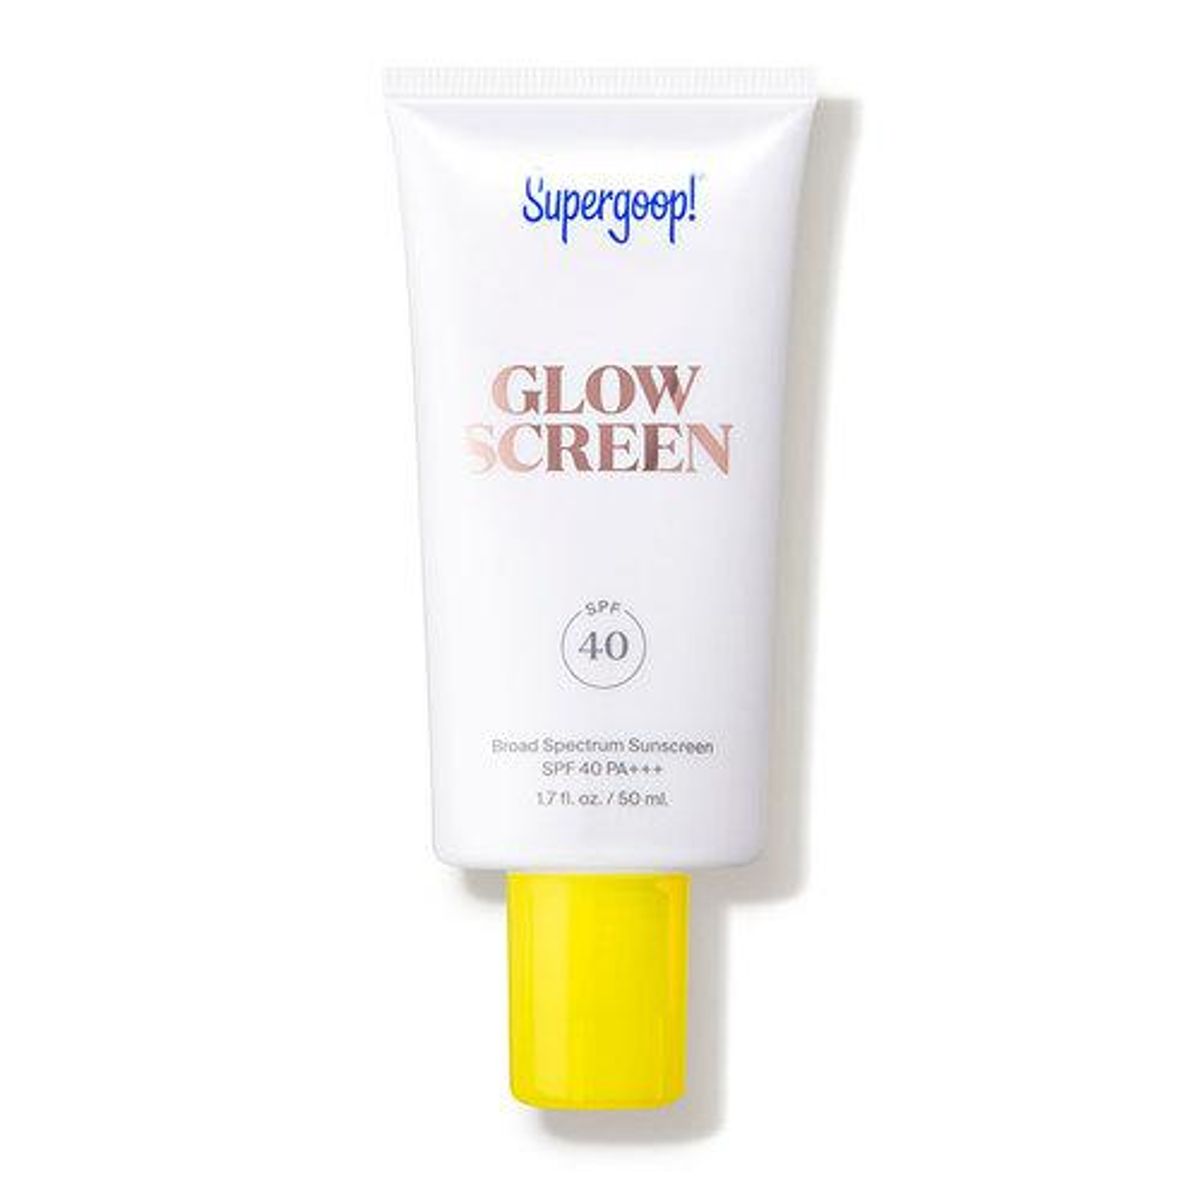 Glowscreen SPF 40 (1.7 fl oz)